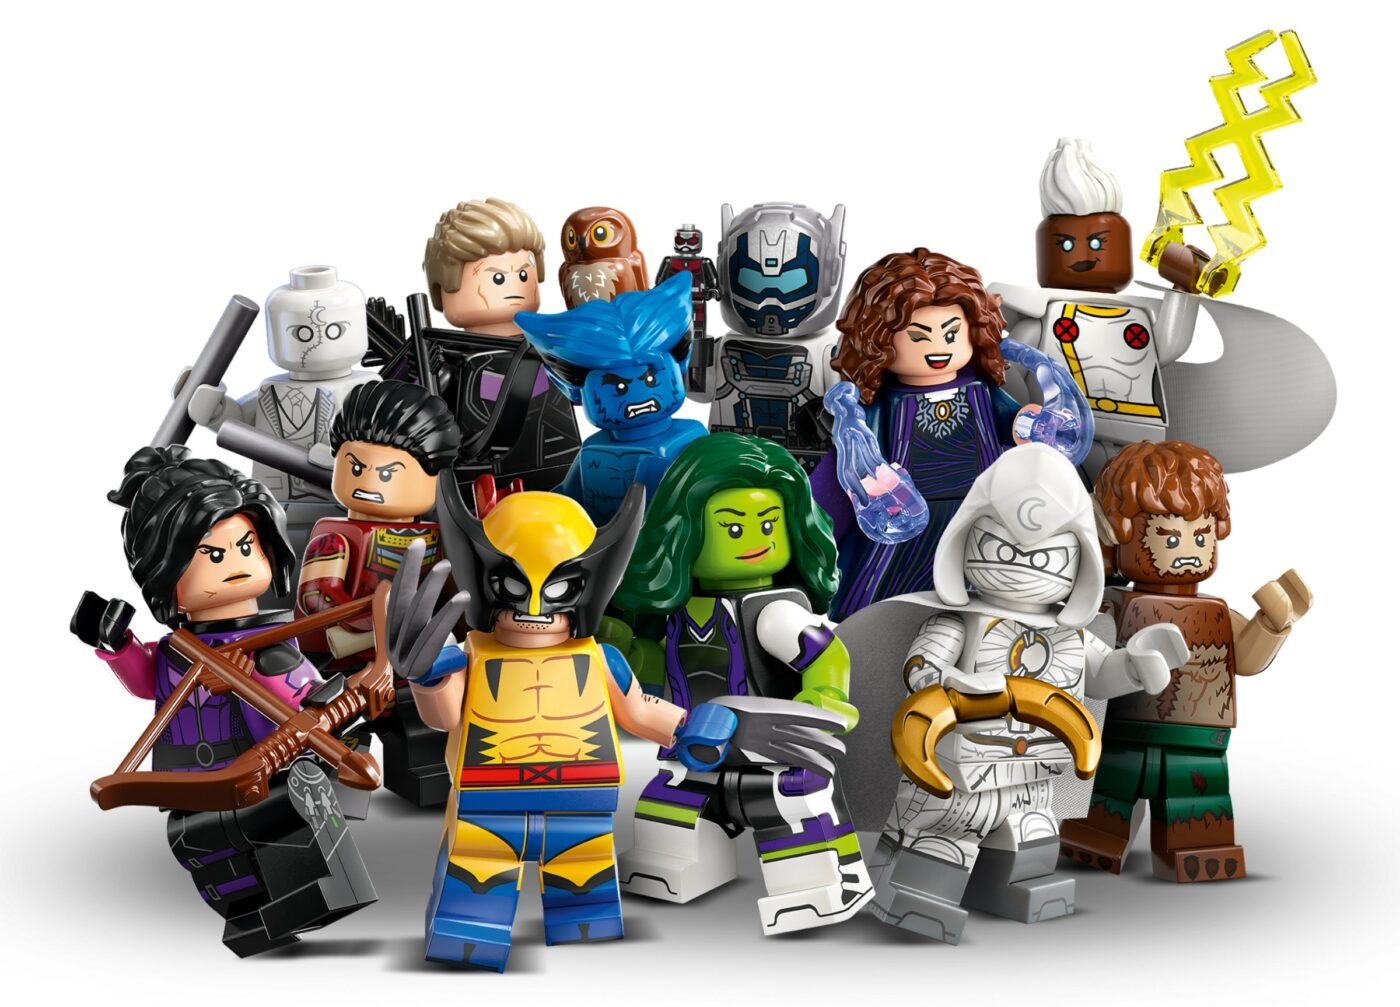 Review: LEGO Marvel Minifigures Series 2 - Jay's Brick Blog